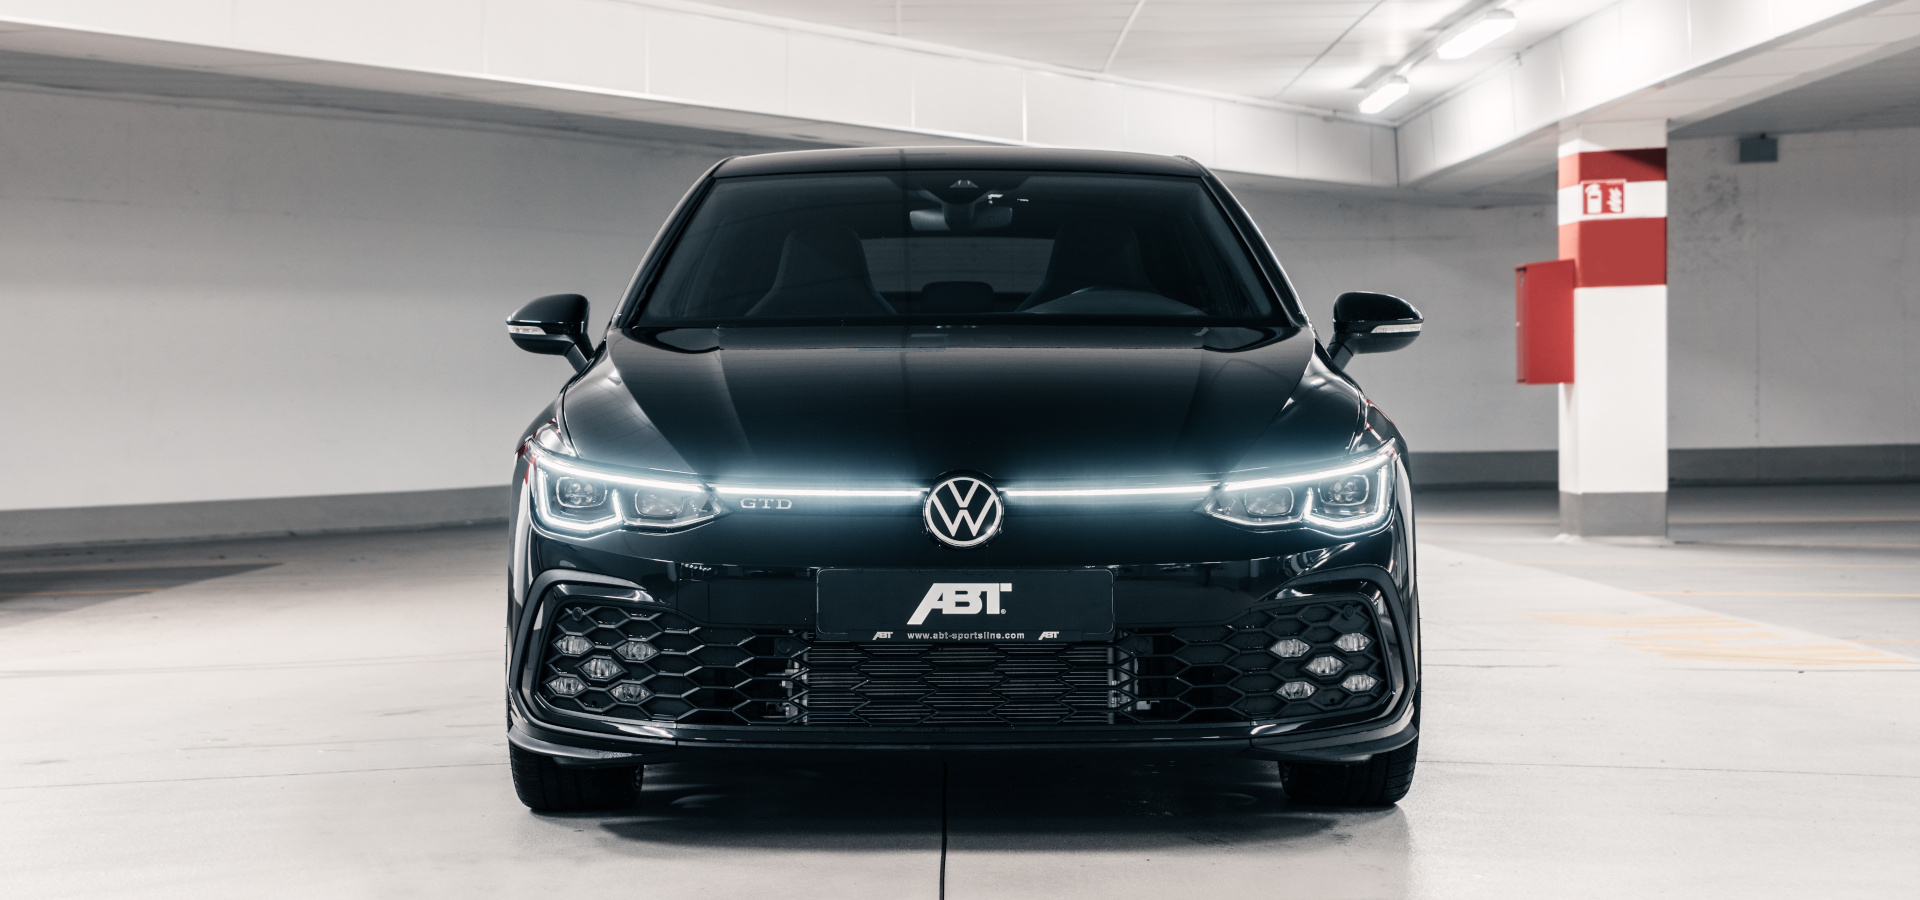 VW Golf - Audi Tuning, VW Tuning, Chiptuning von ABT Sportsline.